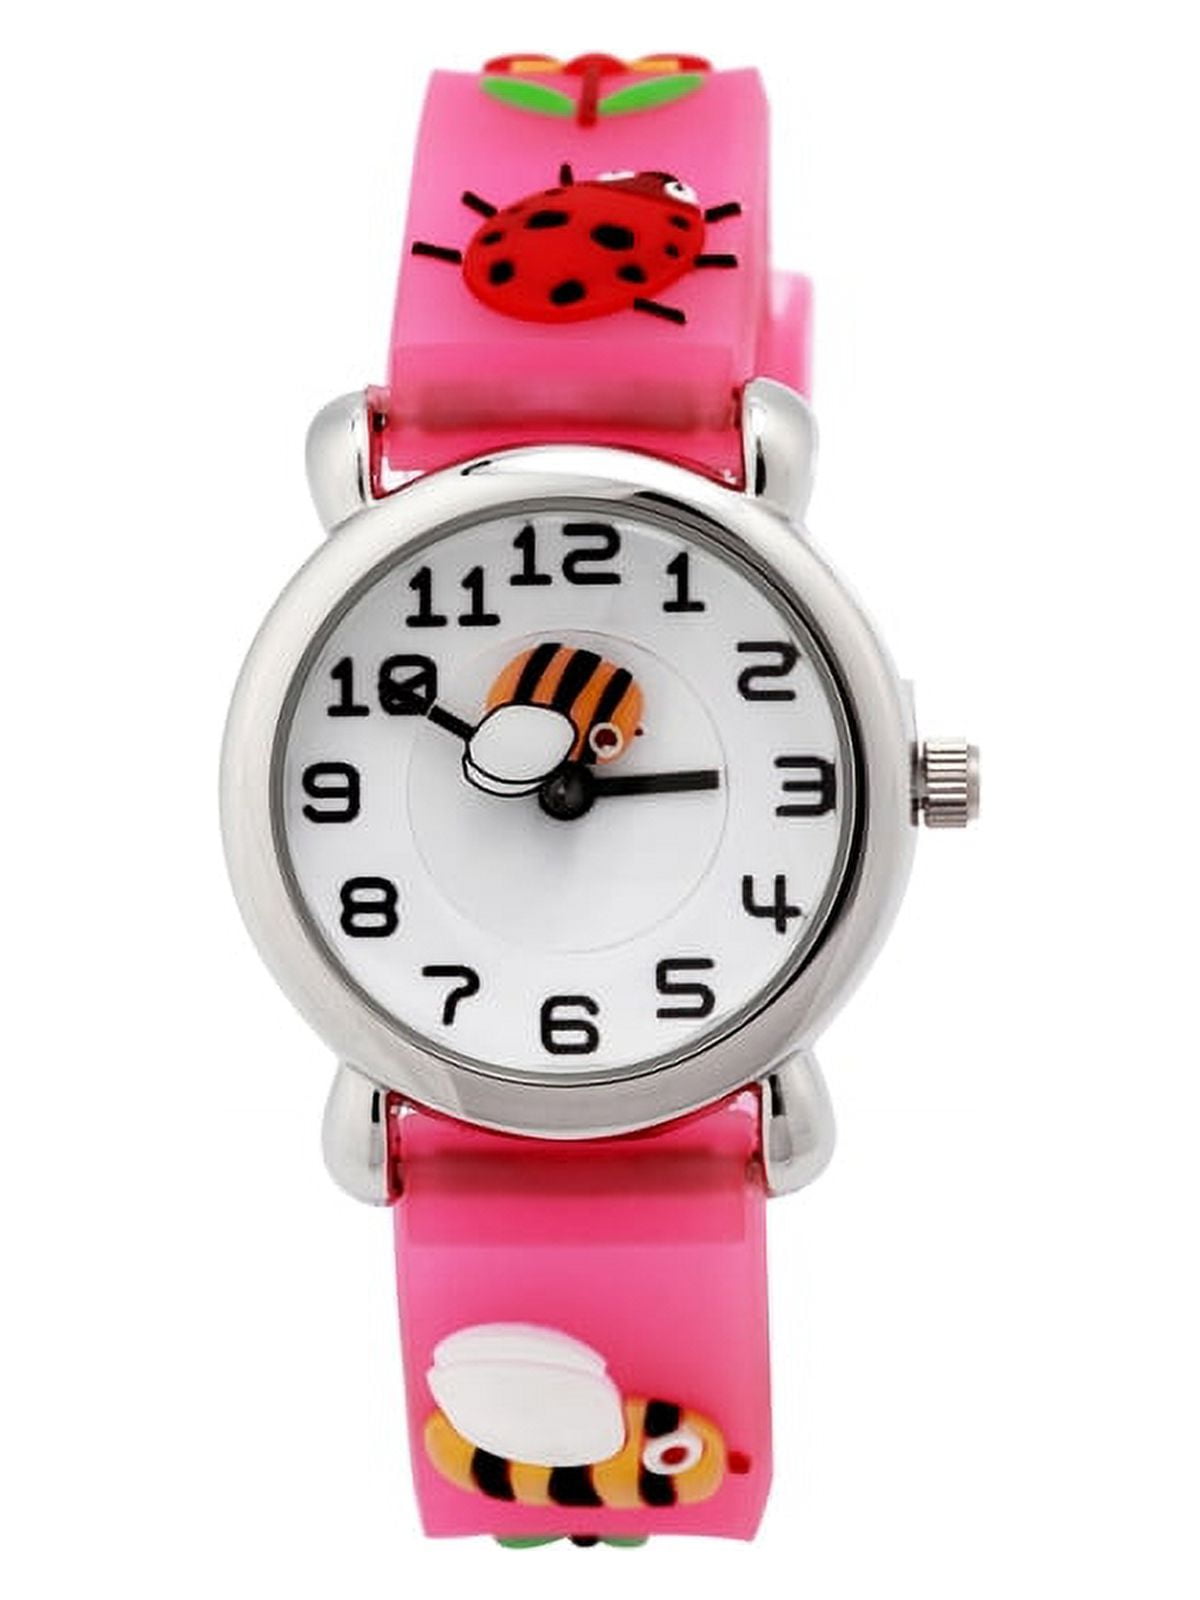 Digital Sport Wrist Watch with Date Lear Time Children Kids Boys Girls Gift  New | eBay